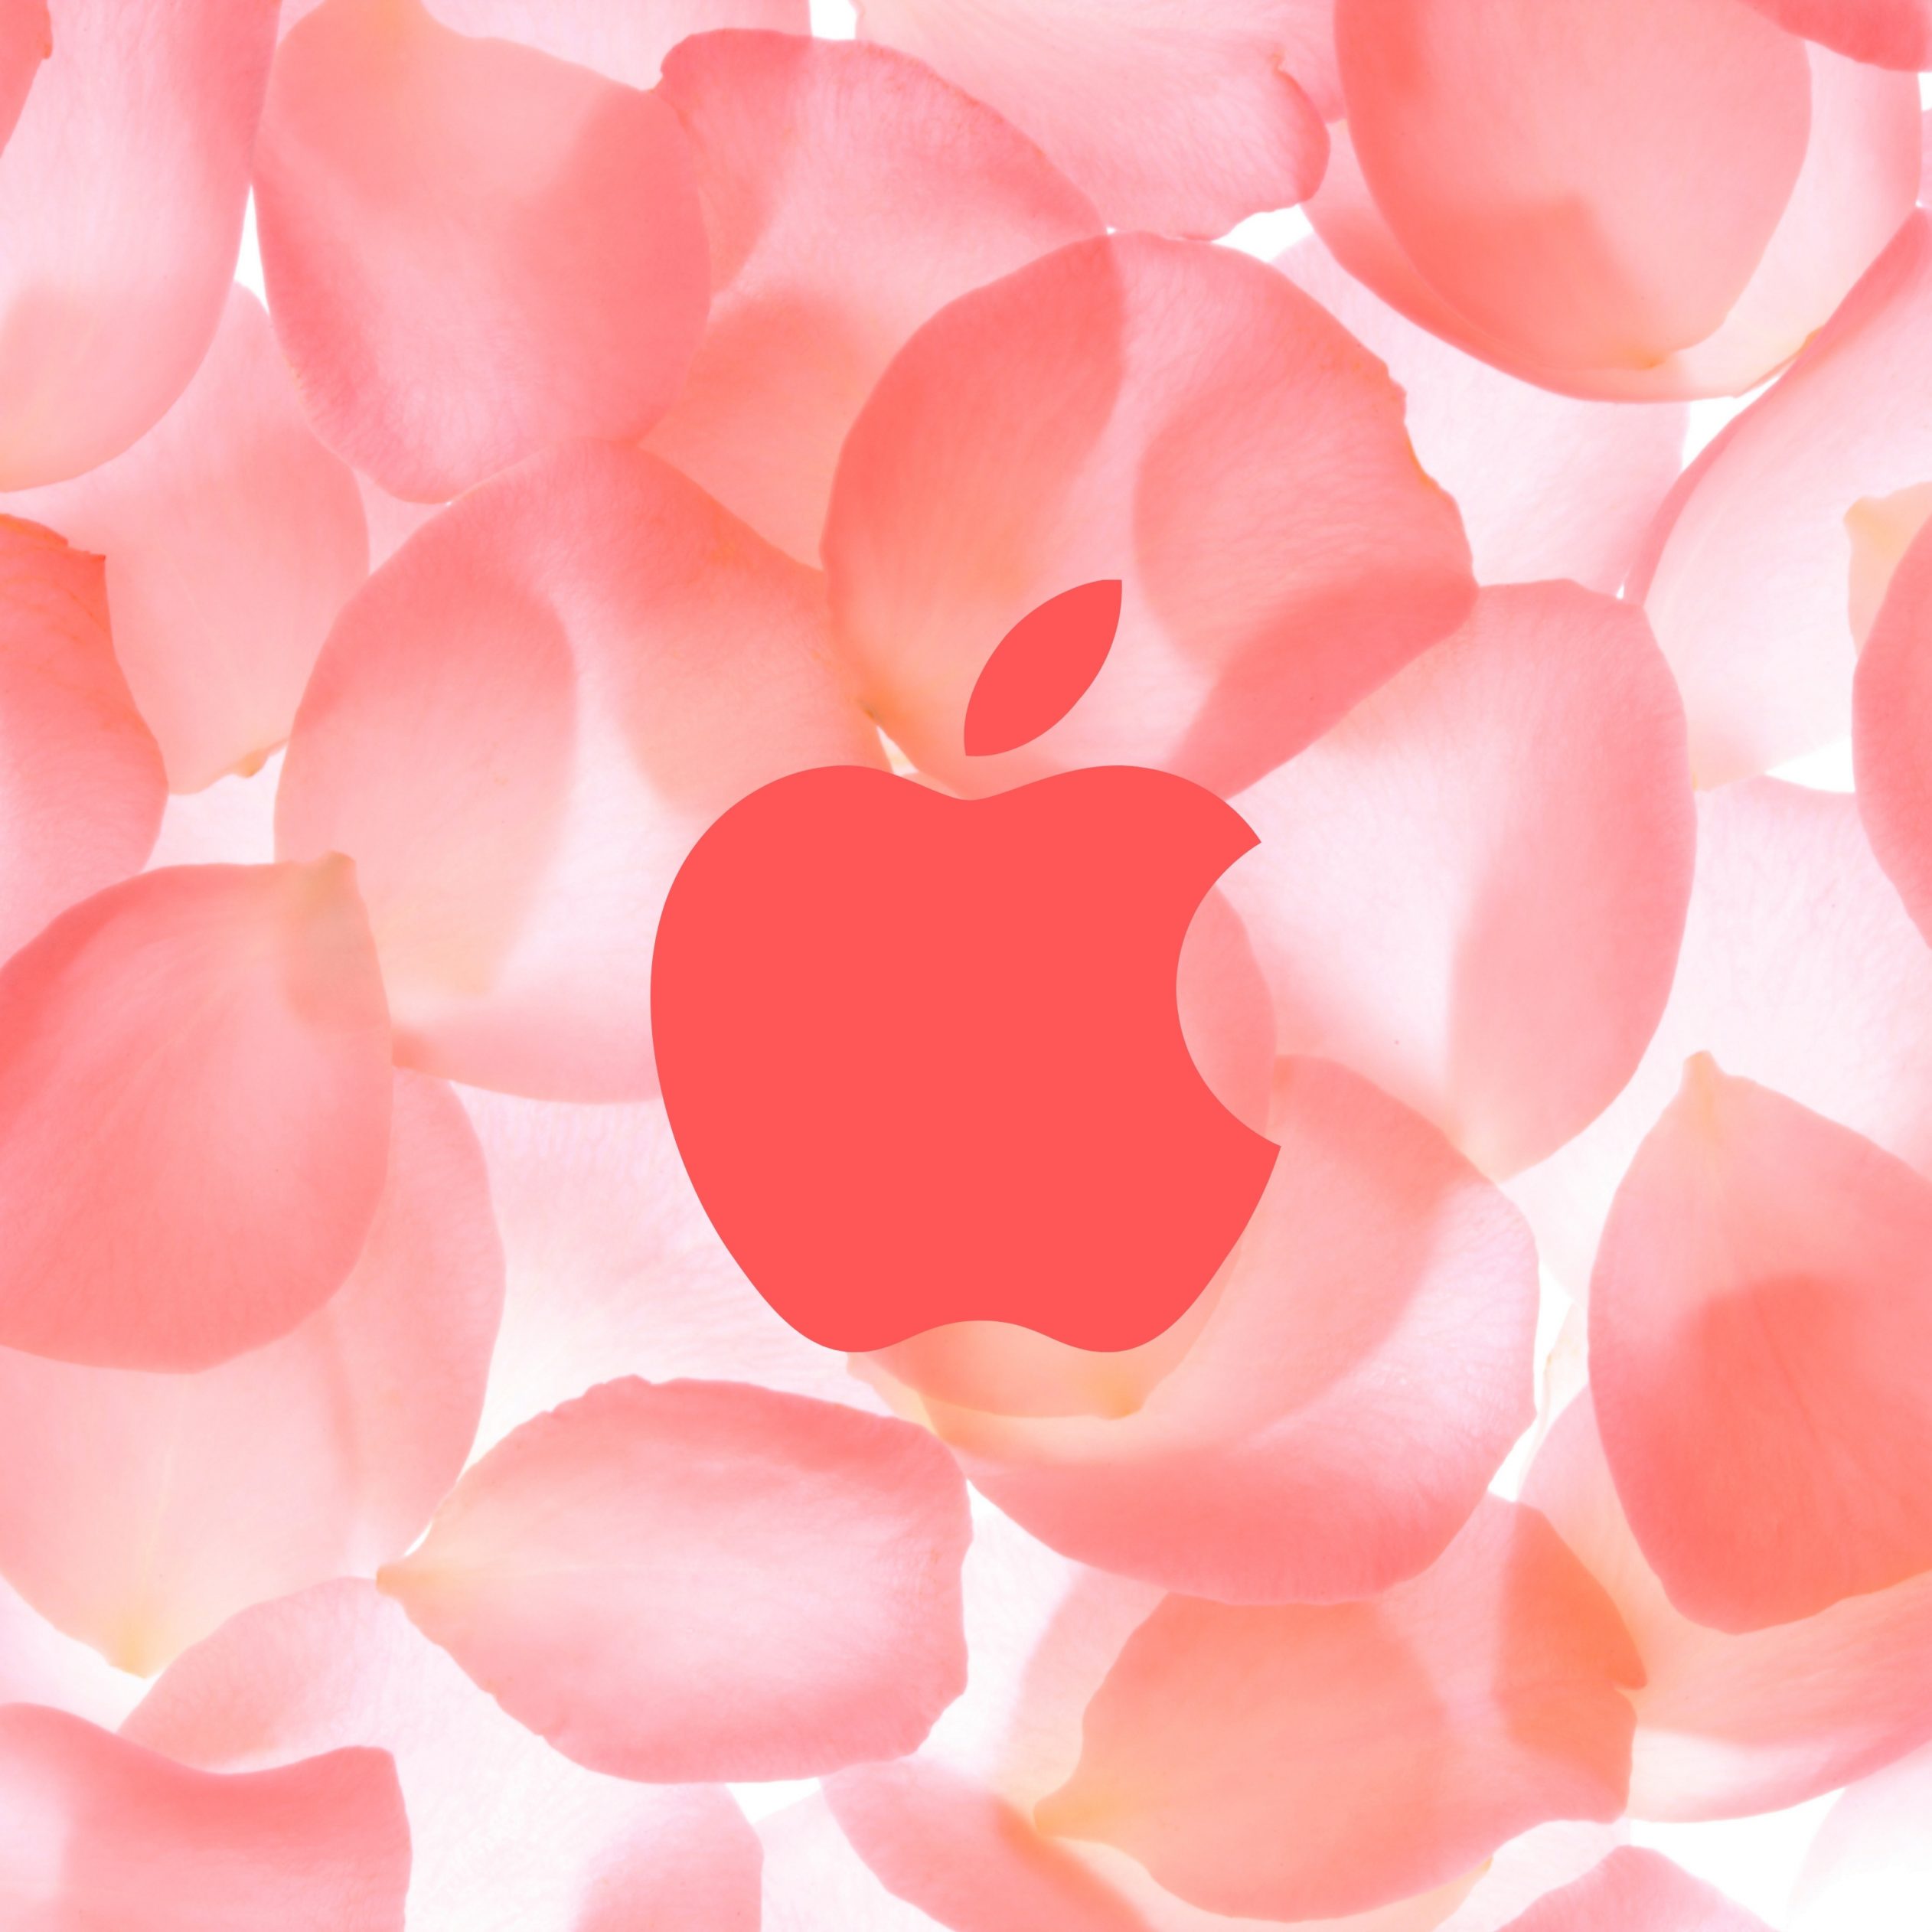 2524x2524 Parallax wallpaper 4k Apple Logo Iphone Macos Beautiful Flower Background iPad Wallpaper 2524x2524 pixels resolution